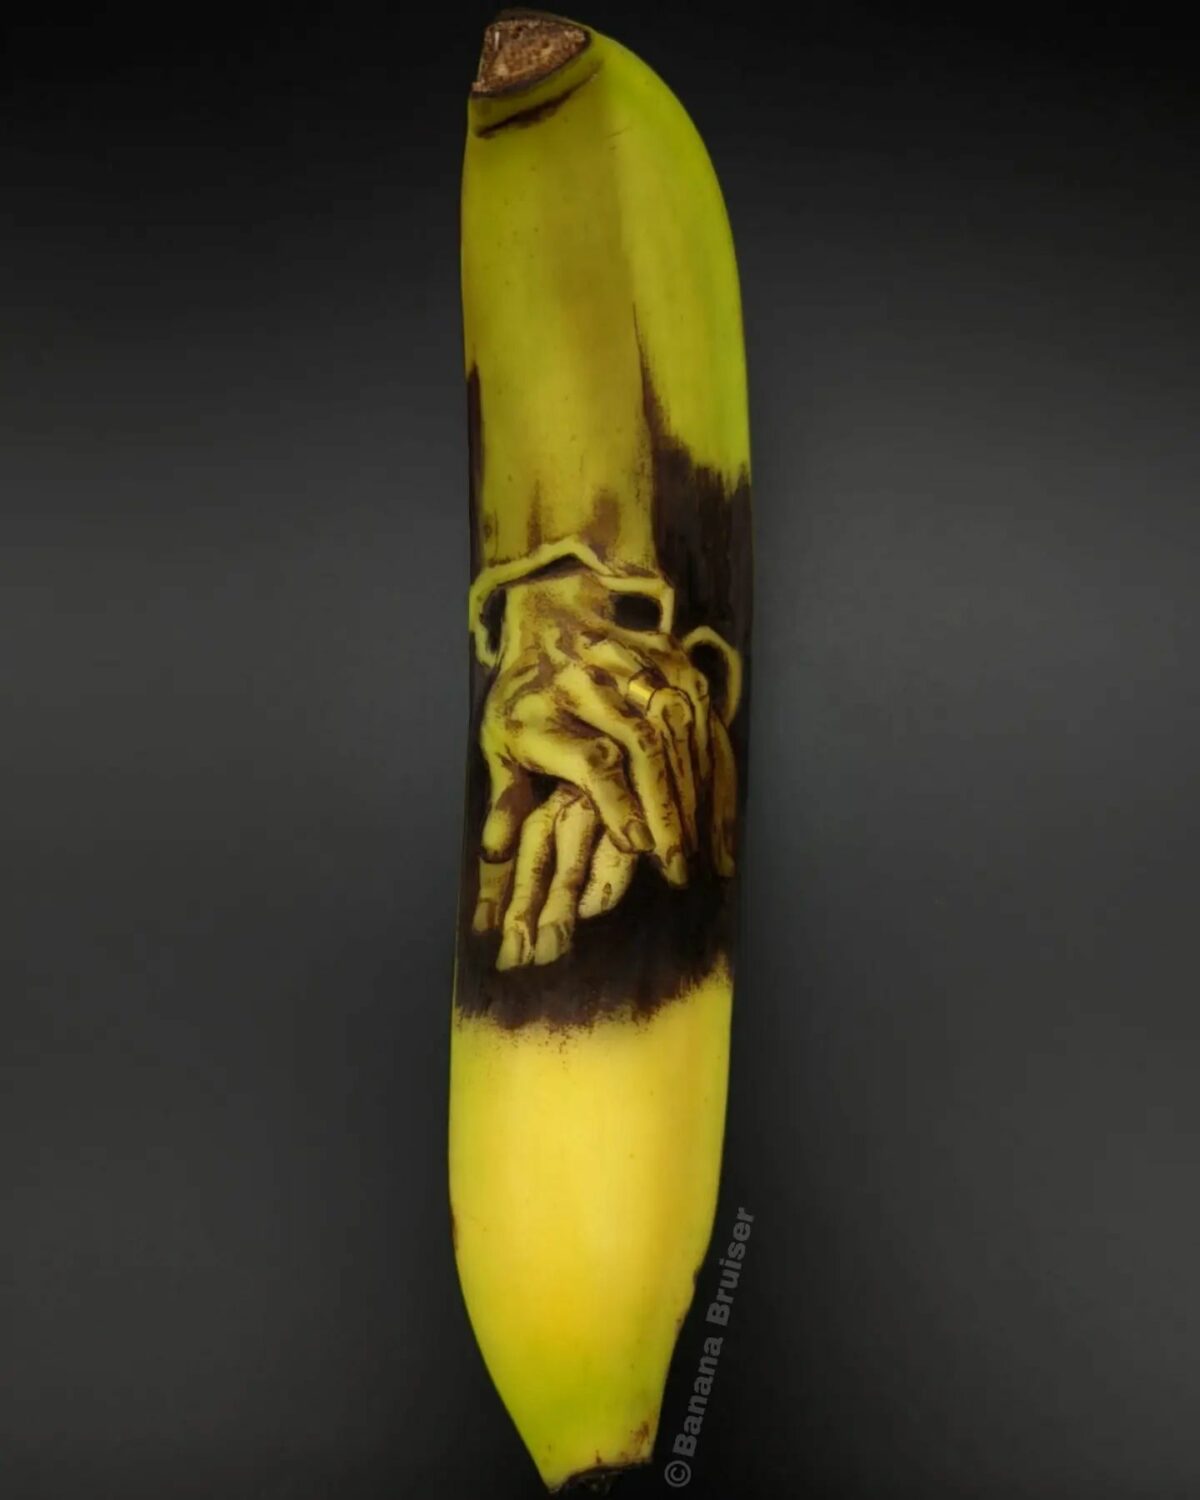 The Bruised Banana Art Of Anna Chojnicka 14